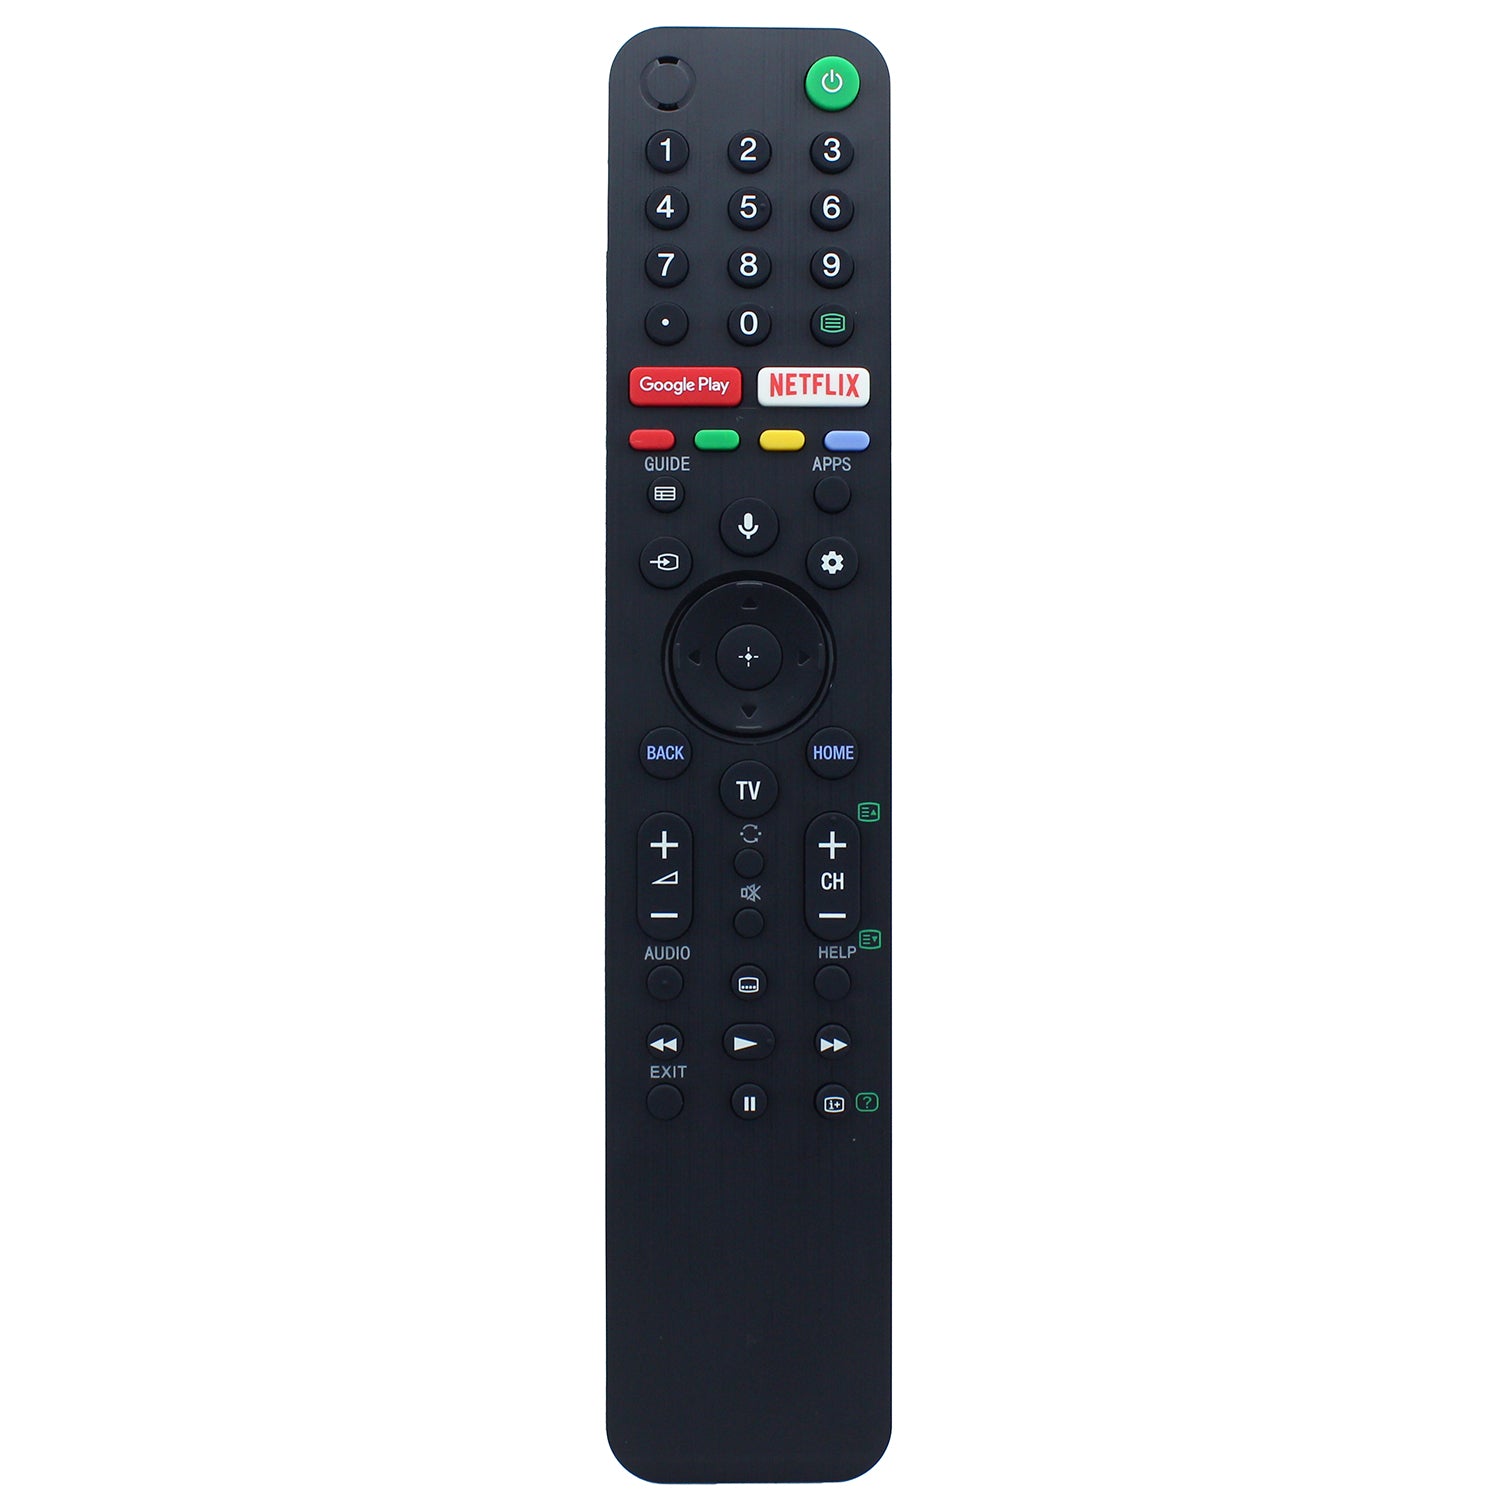 RMF-TX500P RMF-TX520U RMF-TX500U IR Remote Control Replacement For Sony TV